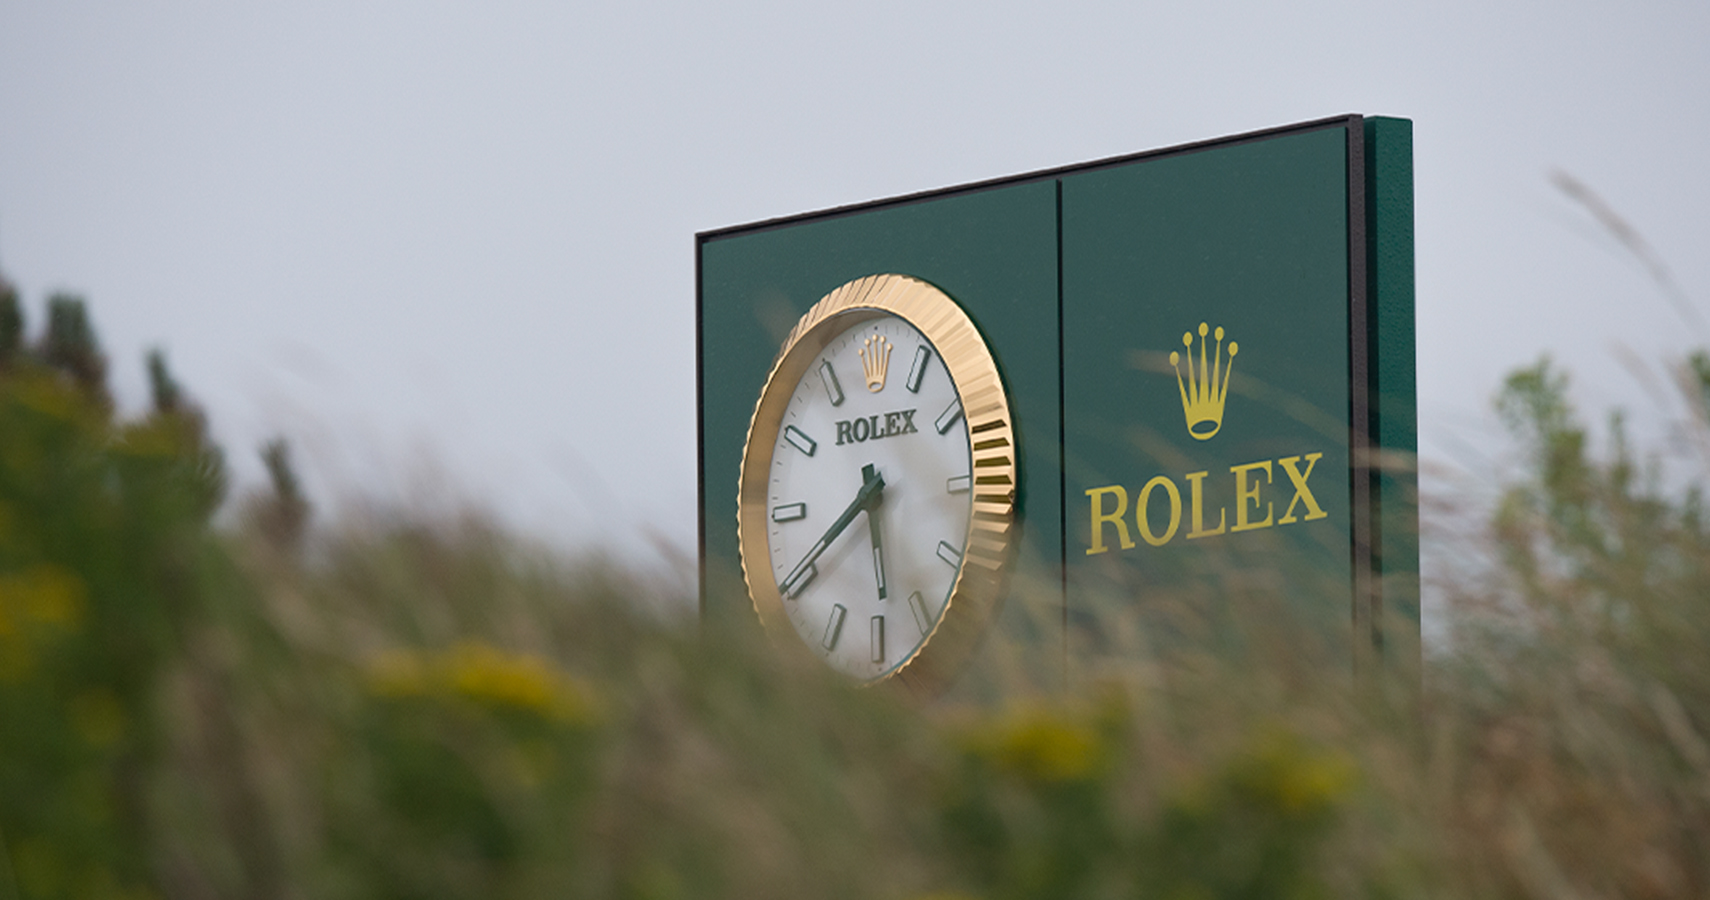 Rolex, Reloj Oficial de The Open